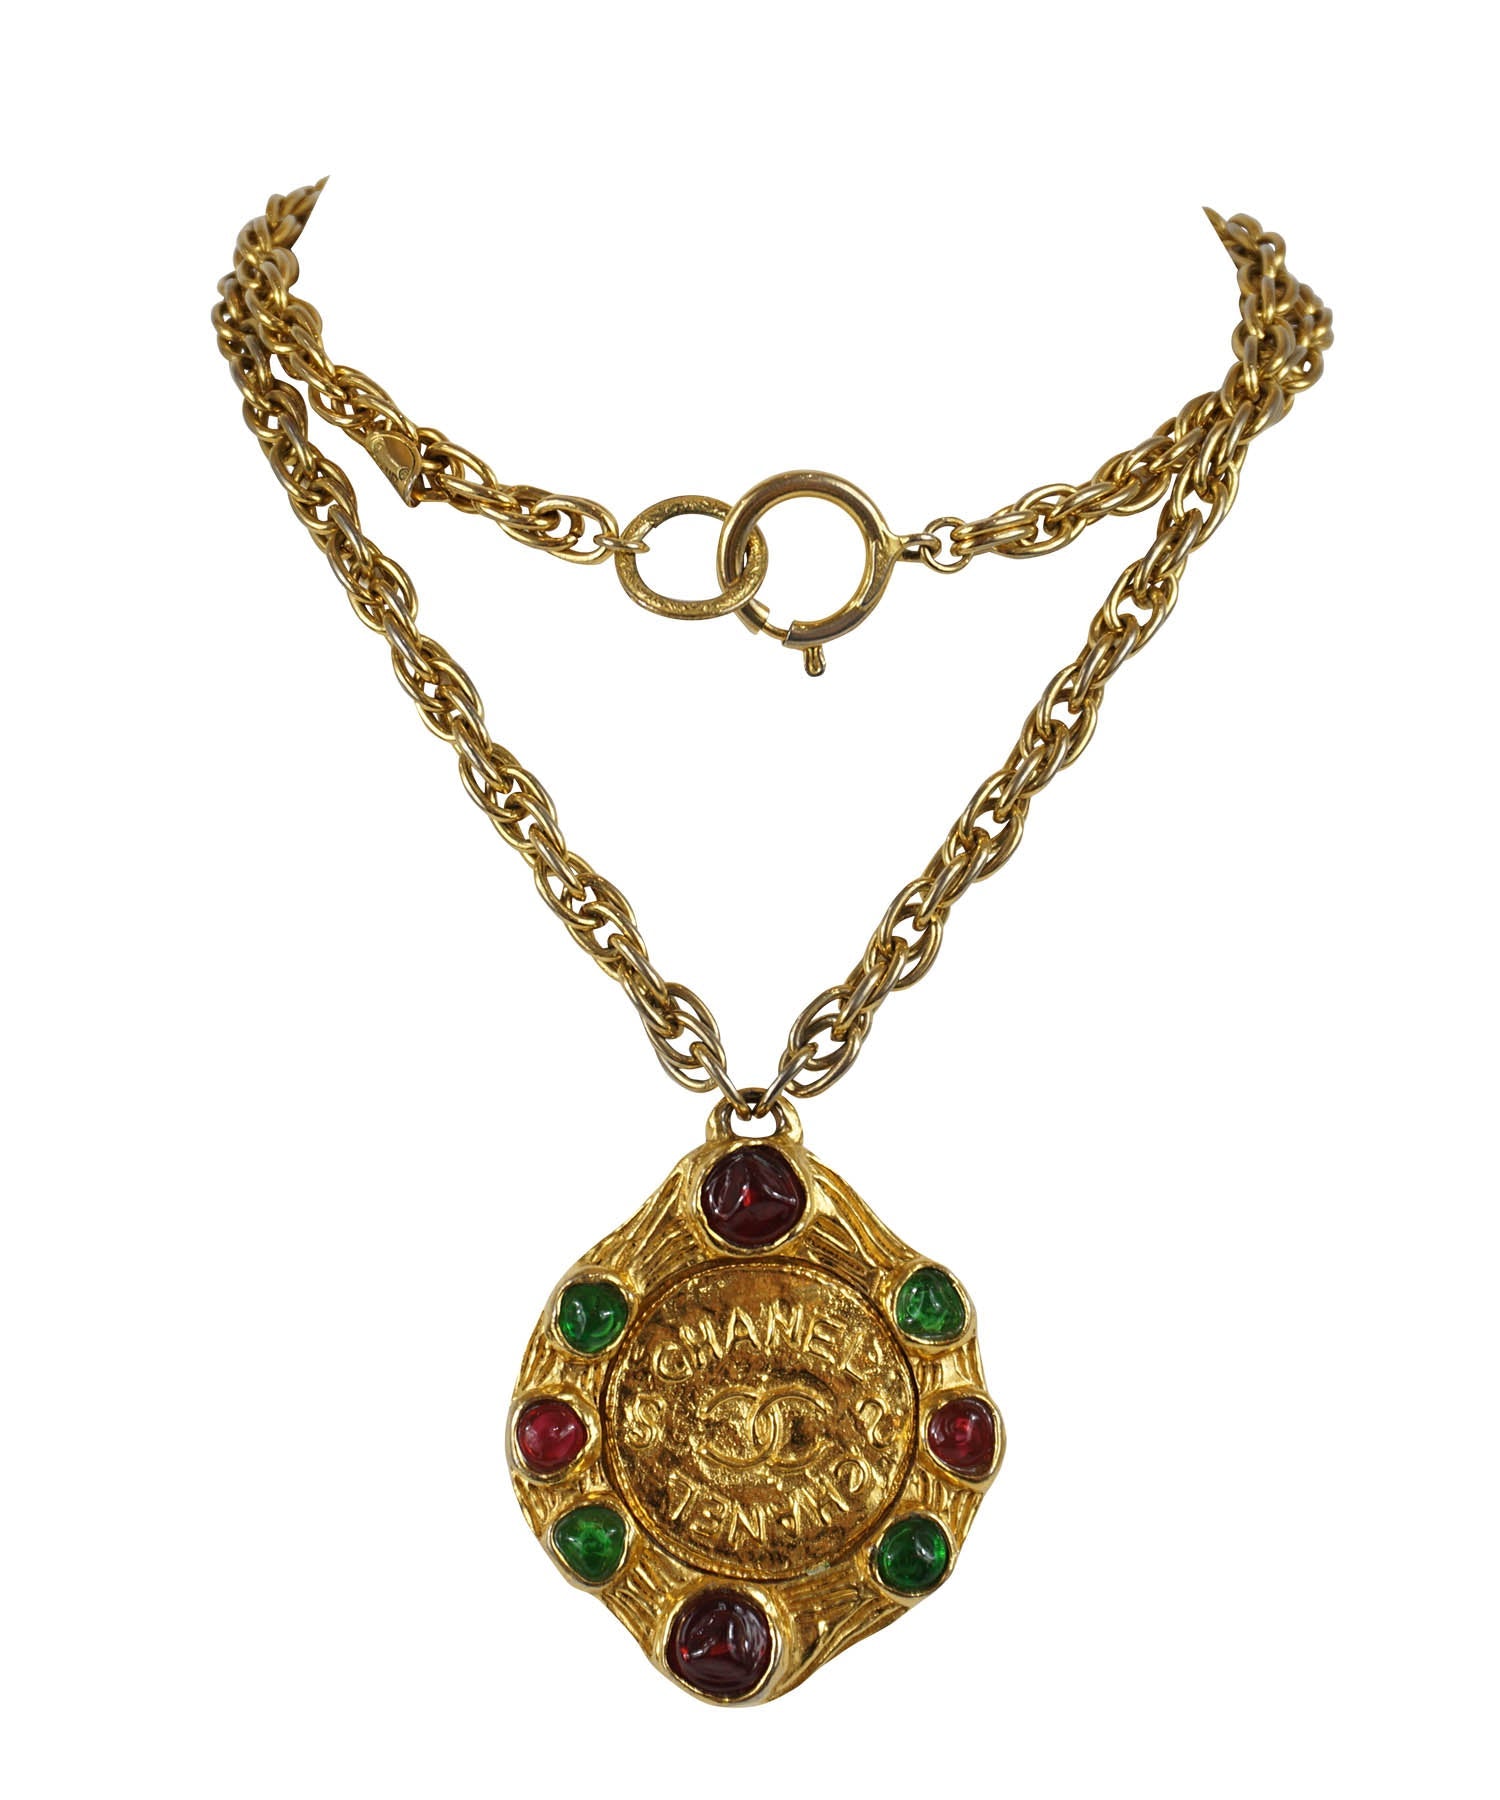 Chanel Vintage 1970's Gripoix and 24k Gold Pendant Necklace